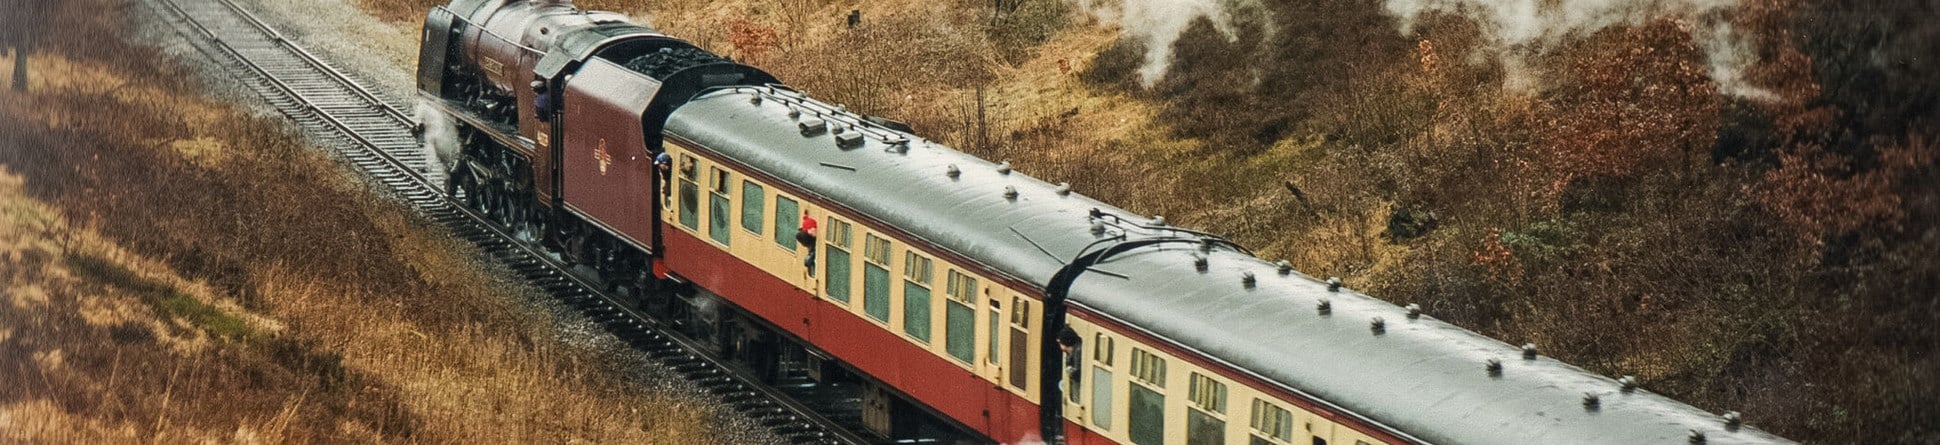 A train on the East Lancashire Light Railway emitting a plume of smoke.